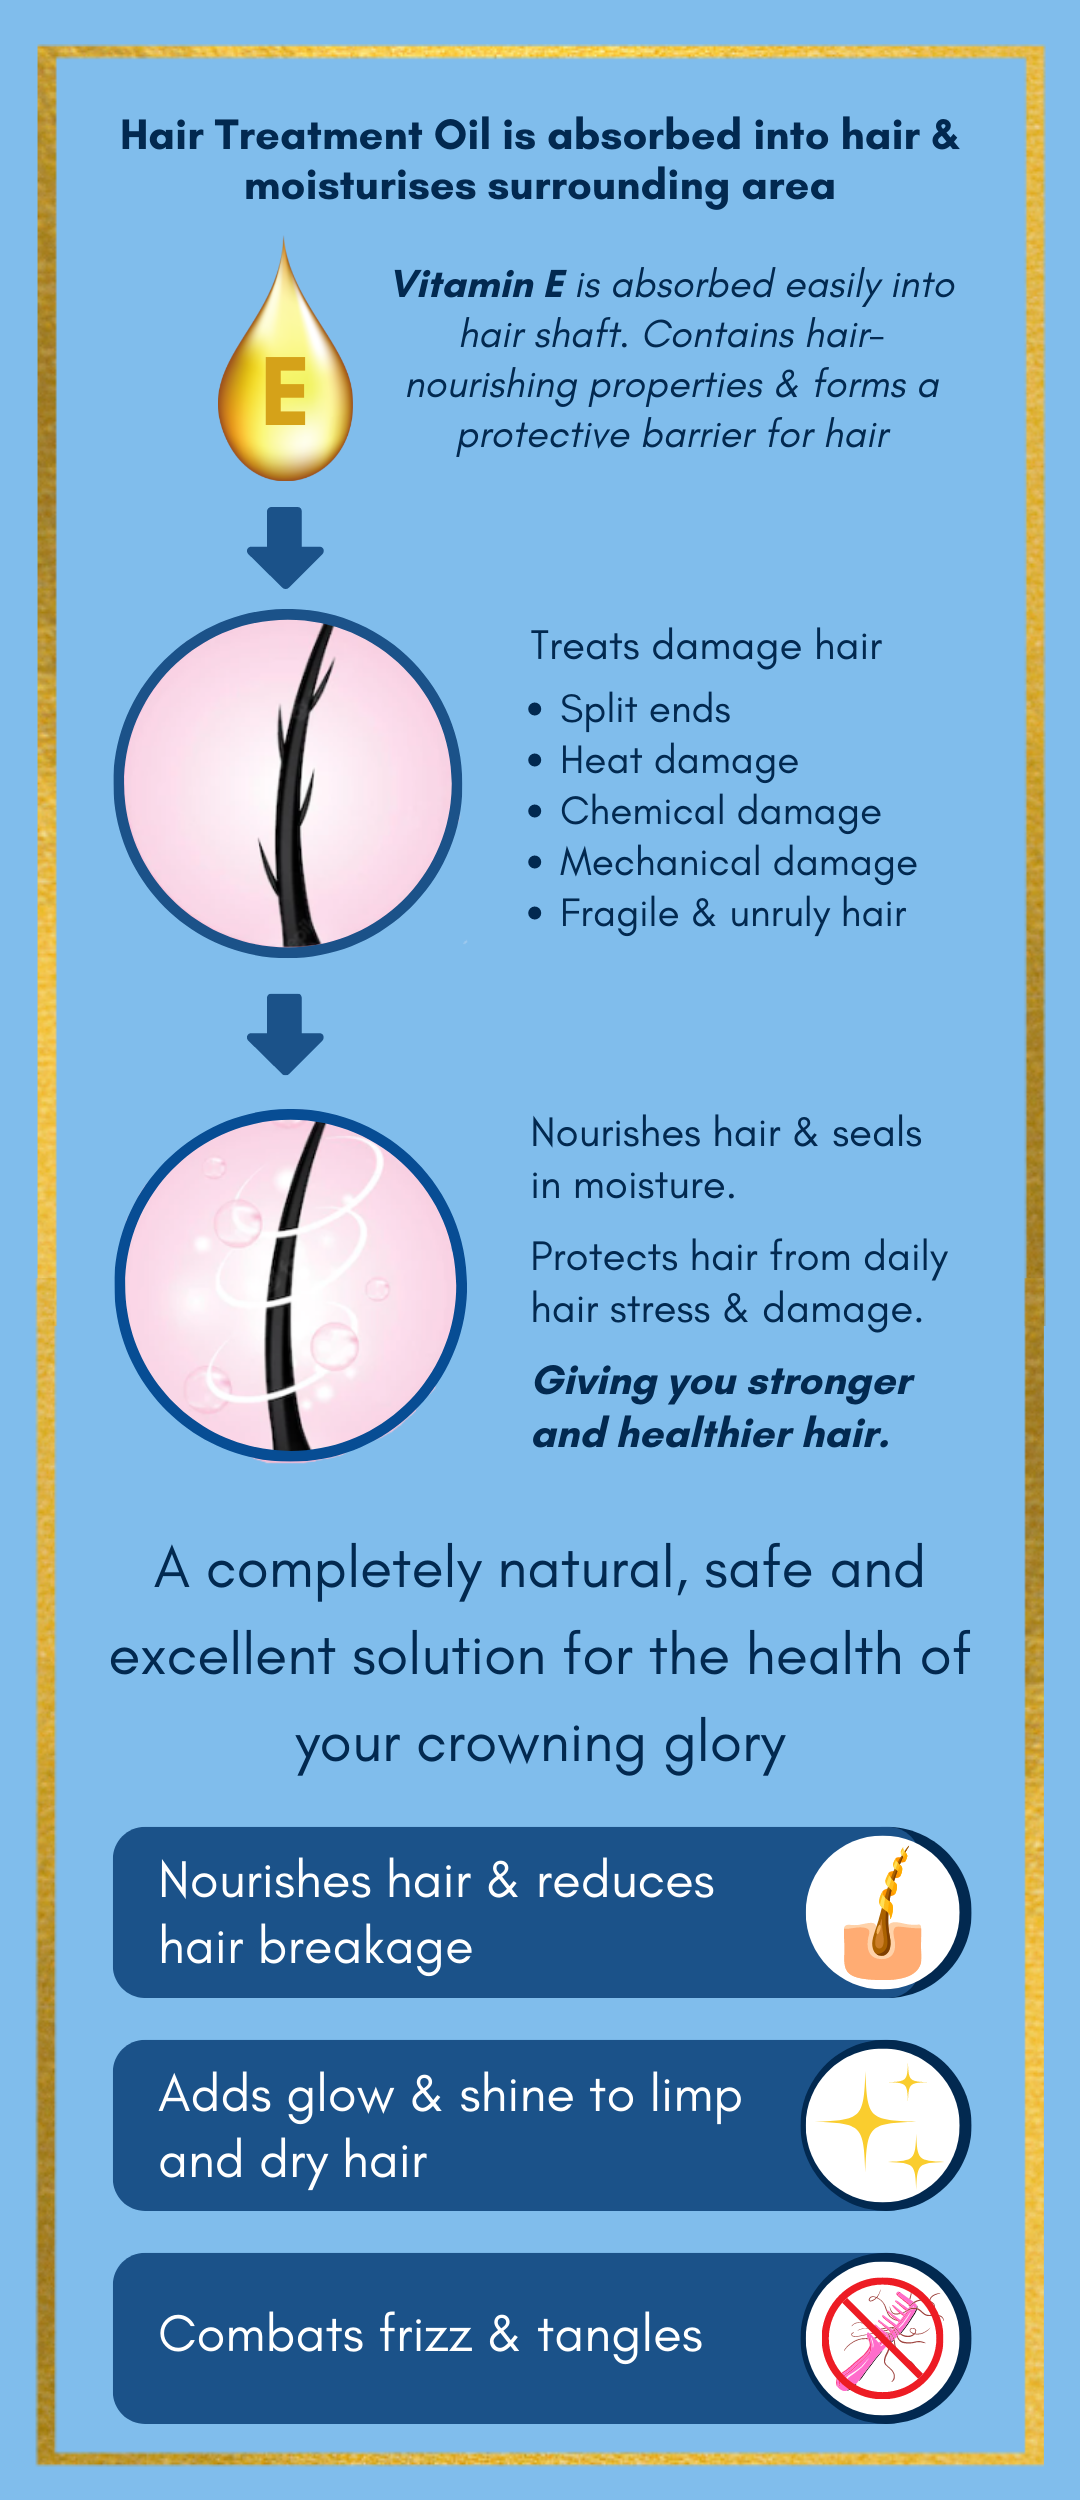 Hair Treatment Oil Description 2